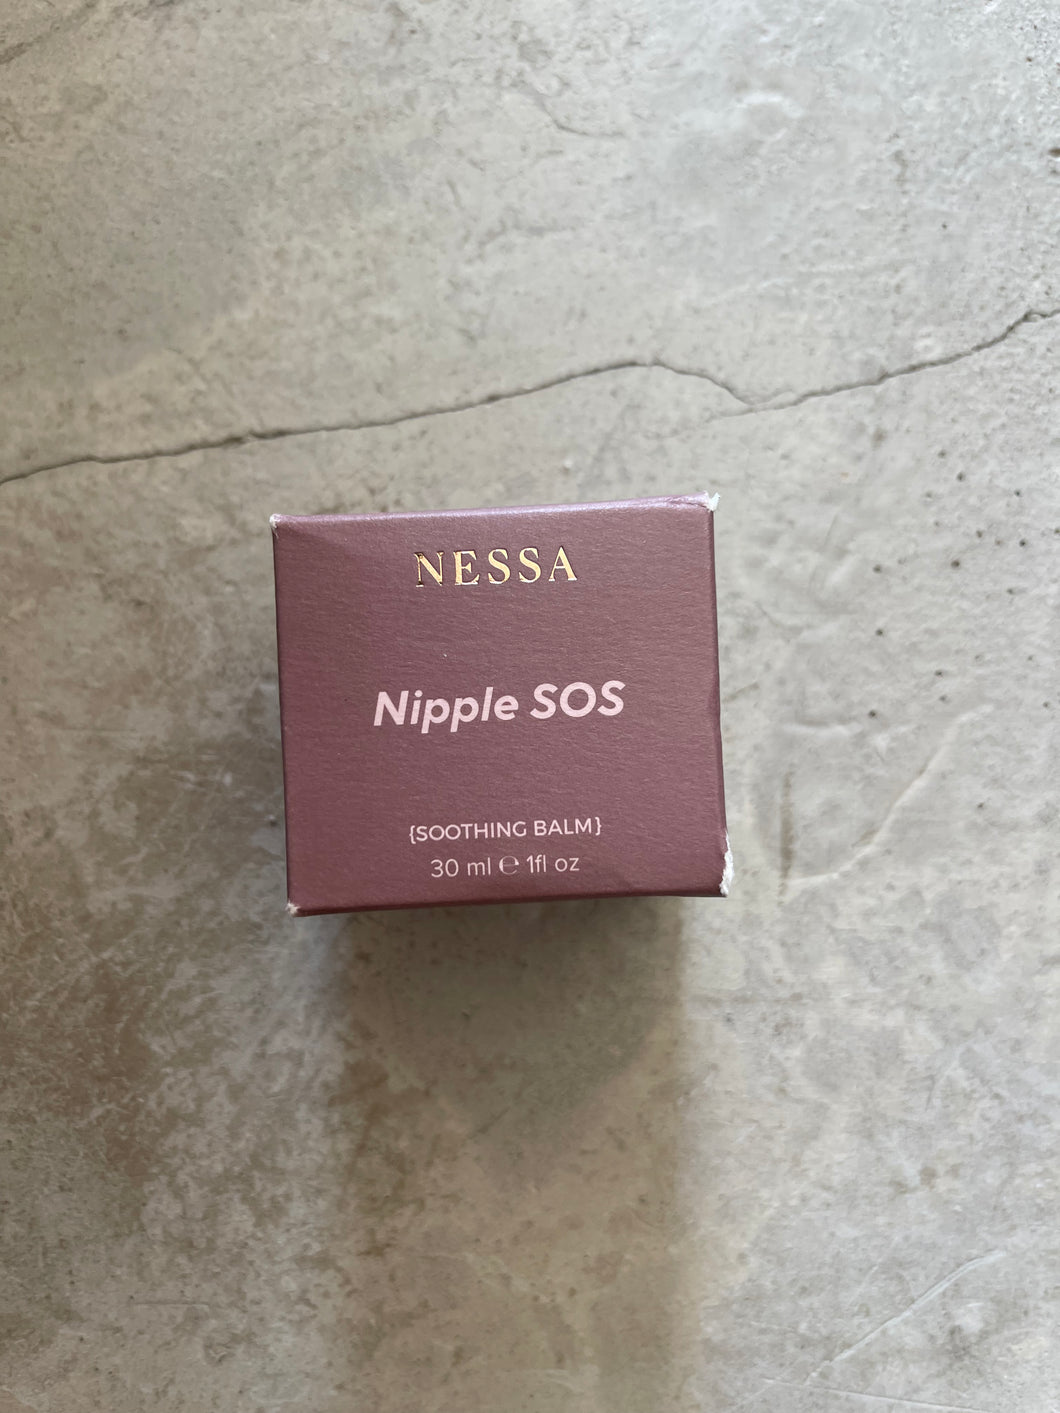 Nessa Nipple SOS